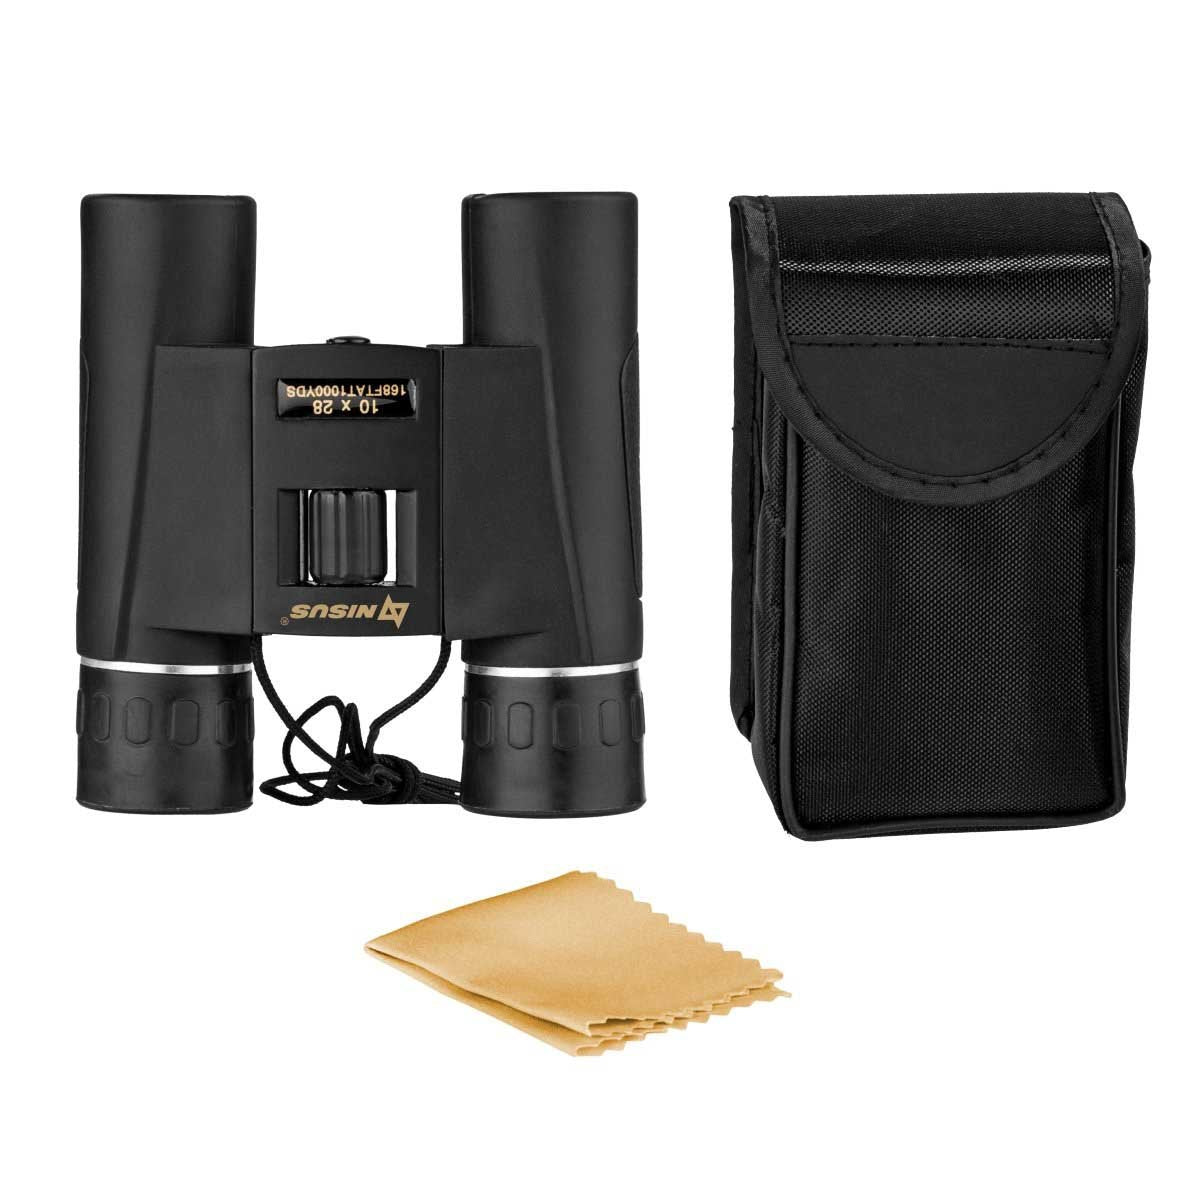 10х28 Nisus Power Adjustable Field Binocular with a Storage Case